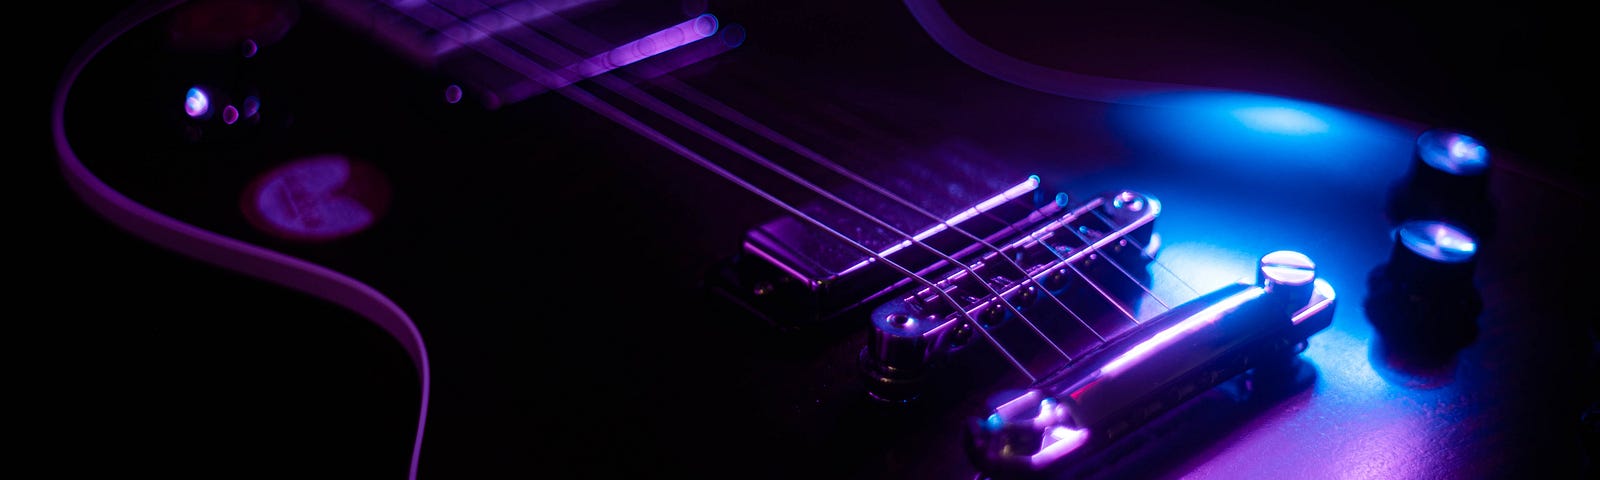 A close-up of an electric guitar